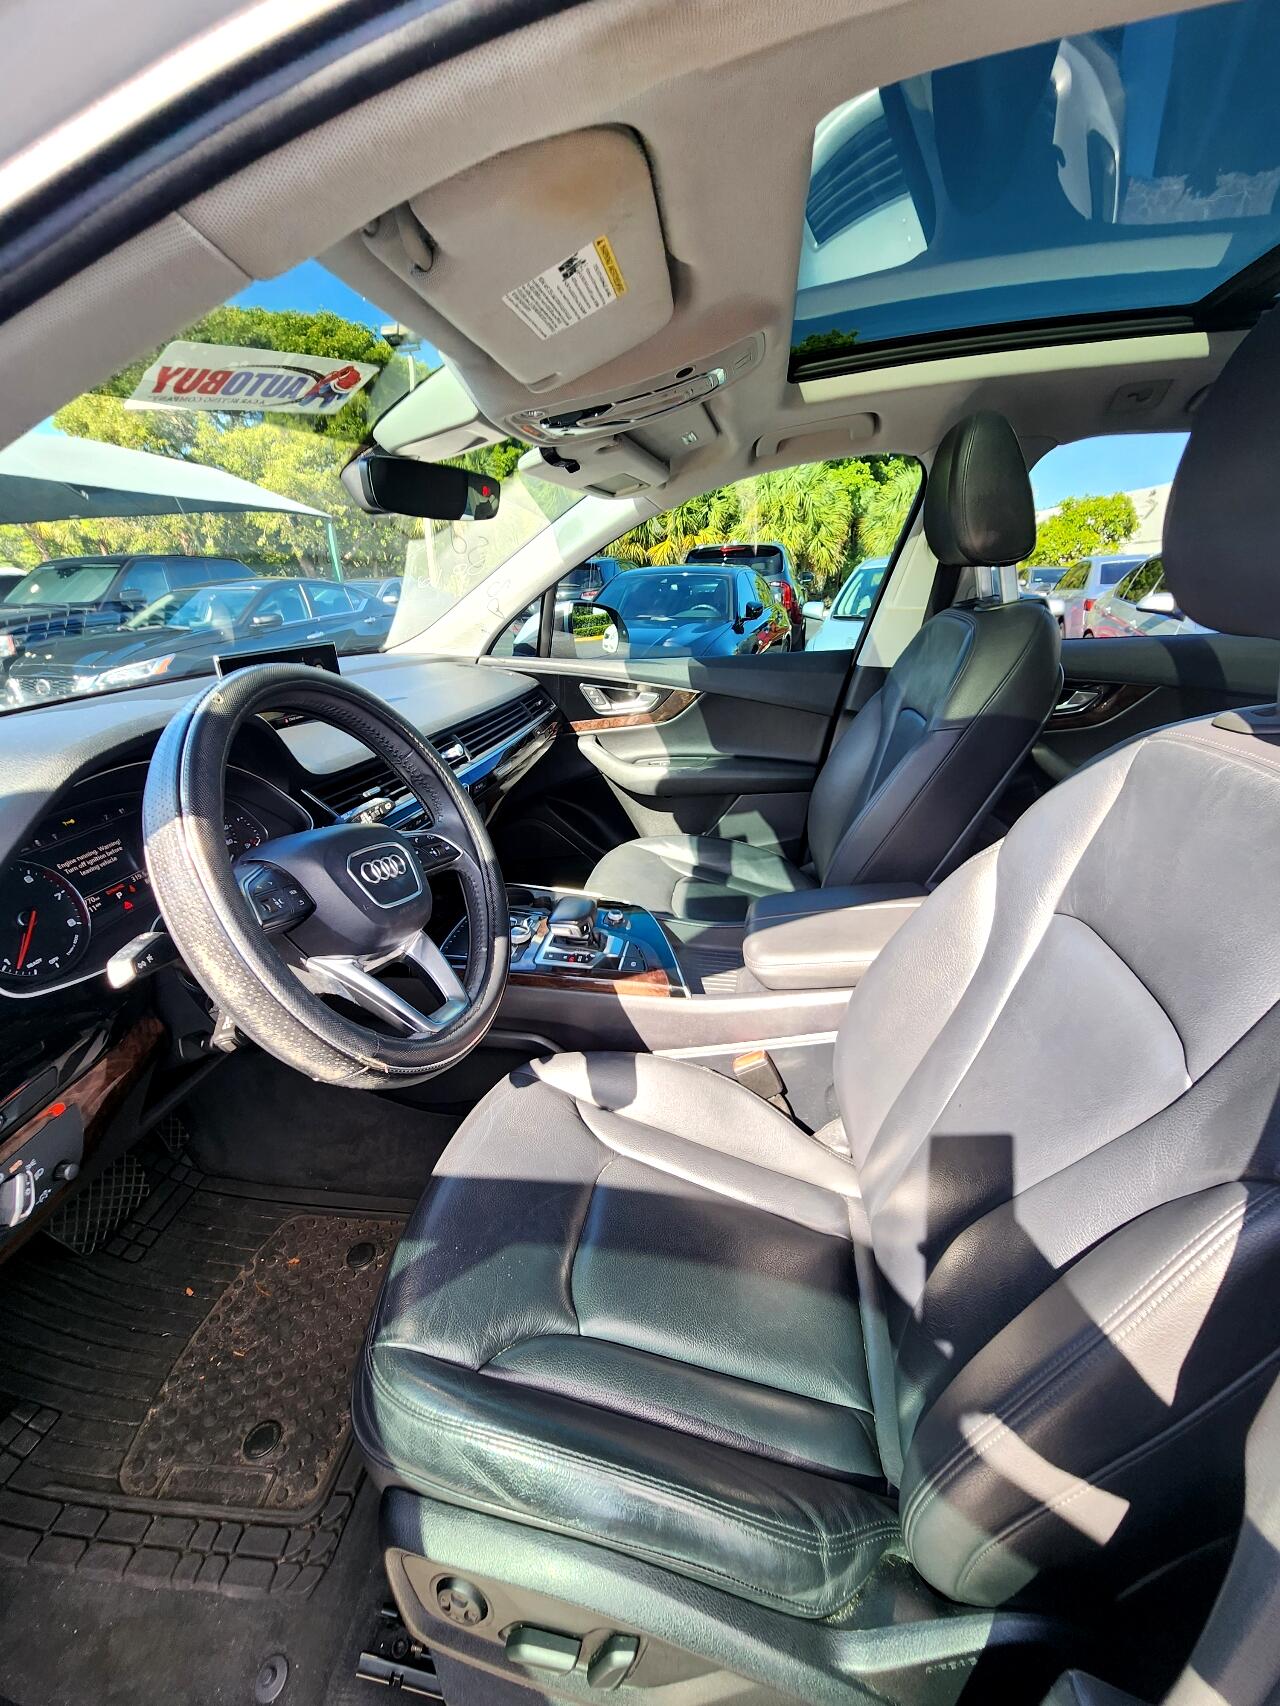 2018 AUDI Q7 SUV / Crossover - $27,999